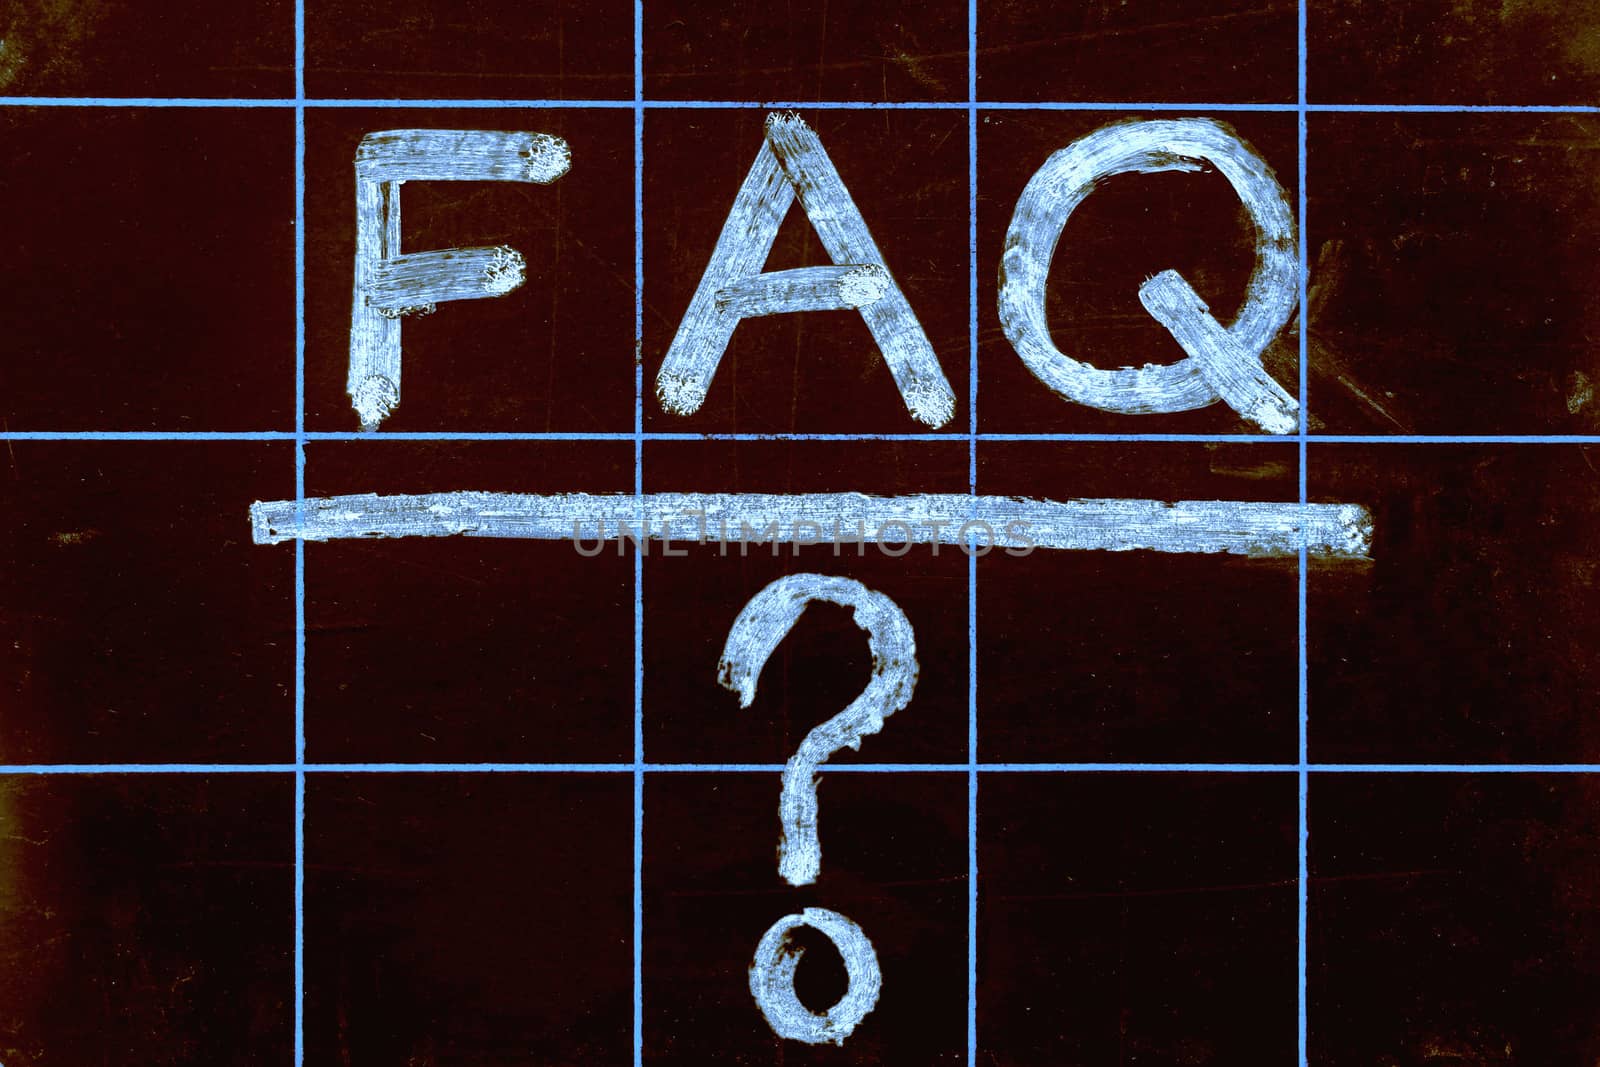 abbreviation FAQ handwritten on black chalkboard by yands